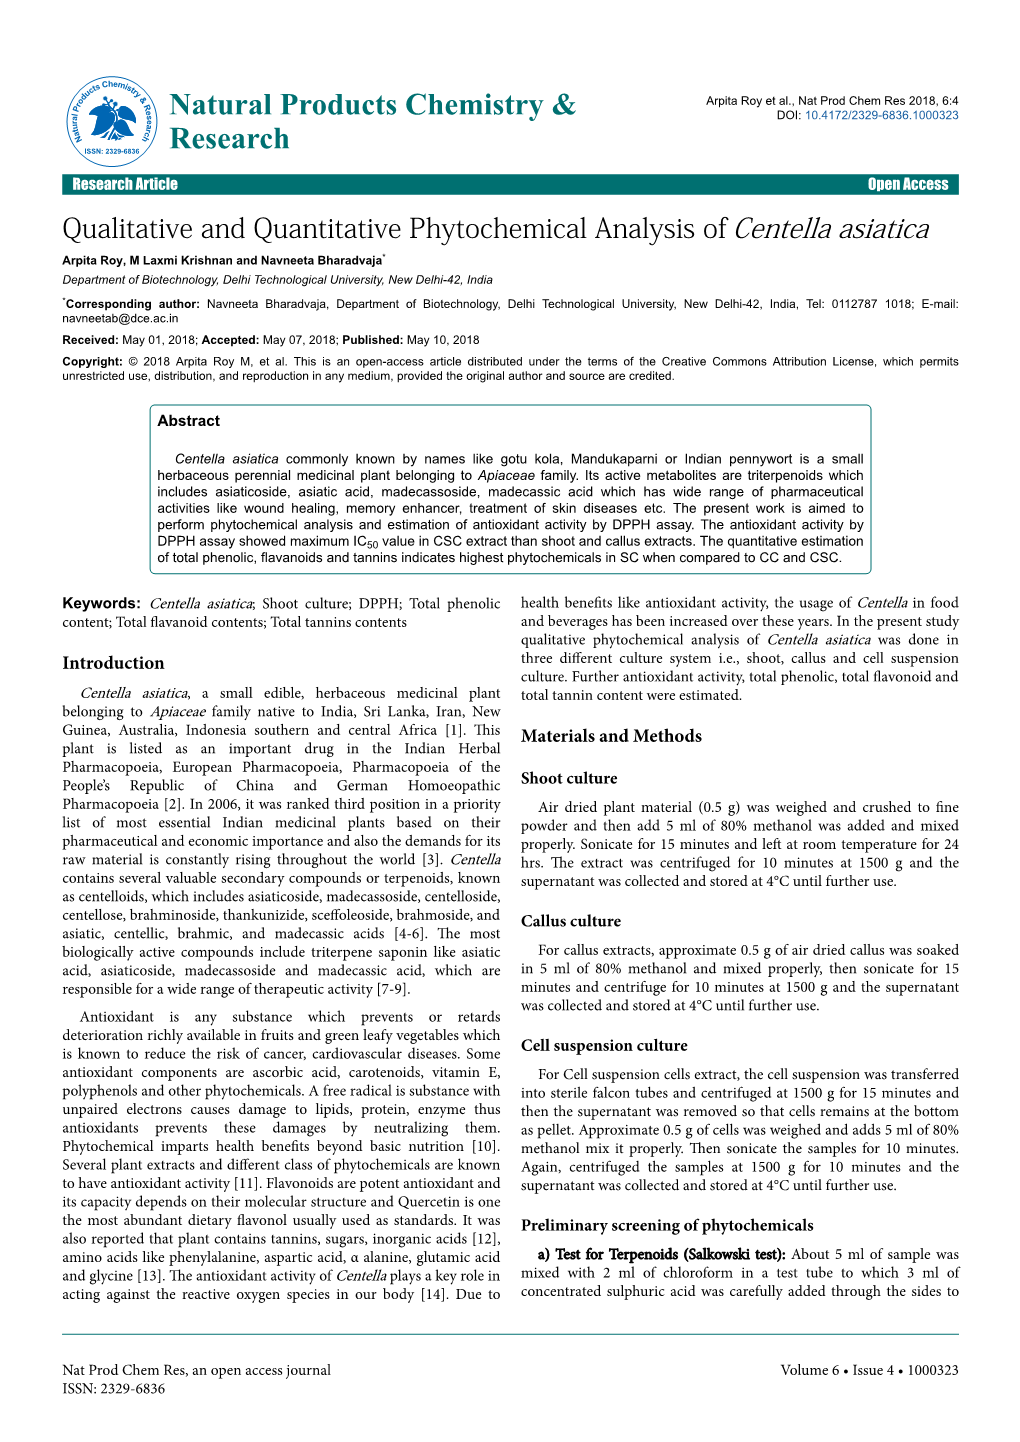 Qualitative and Quantitative Phytochemical Analysis of Centella